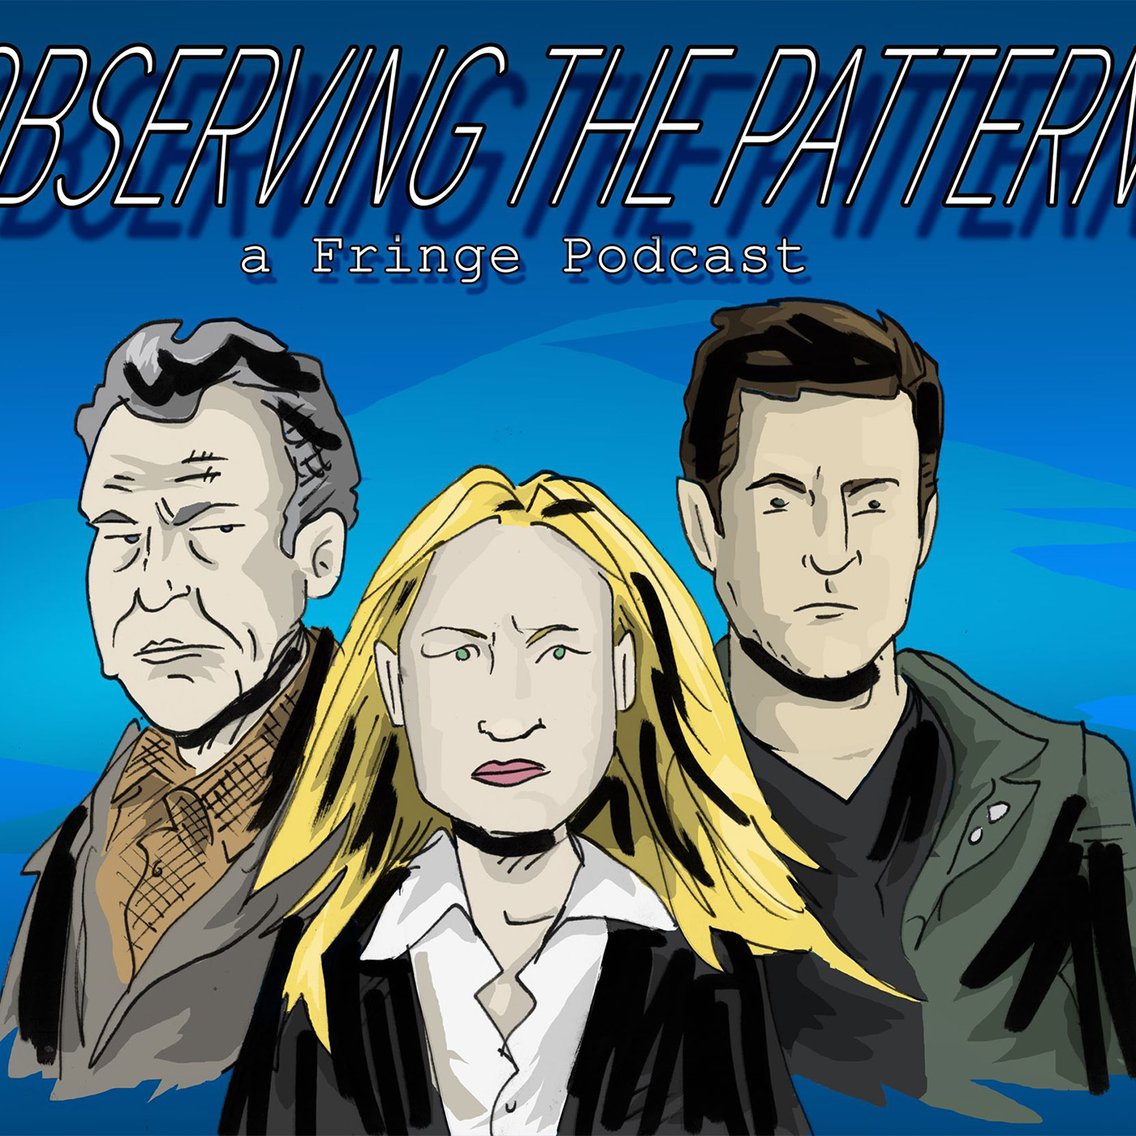 Observing the Pattern - A Fringe Podcast - imagen de portada
